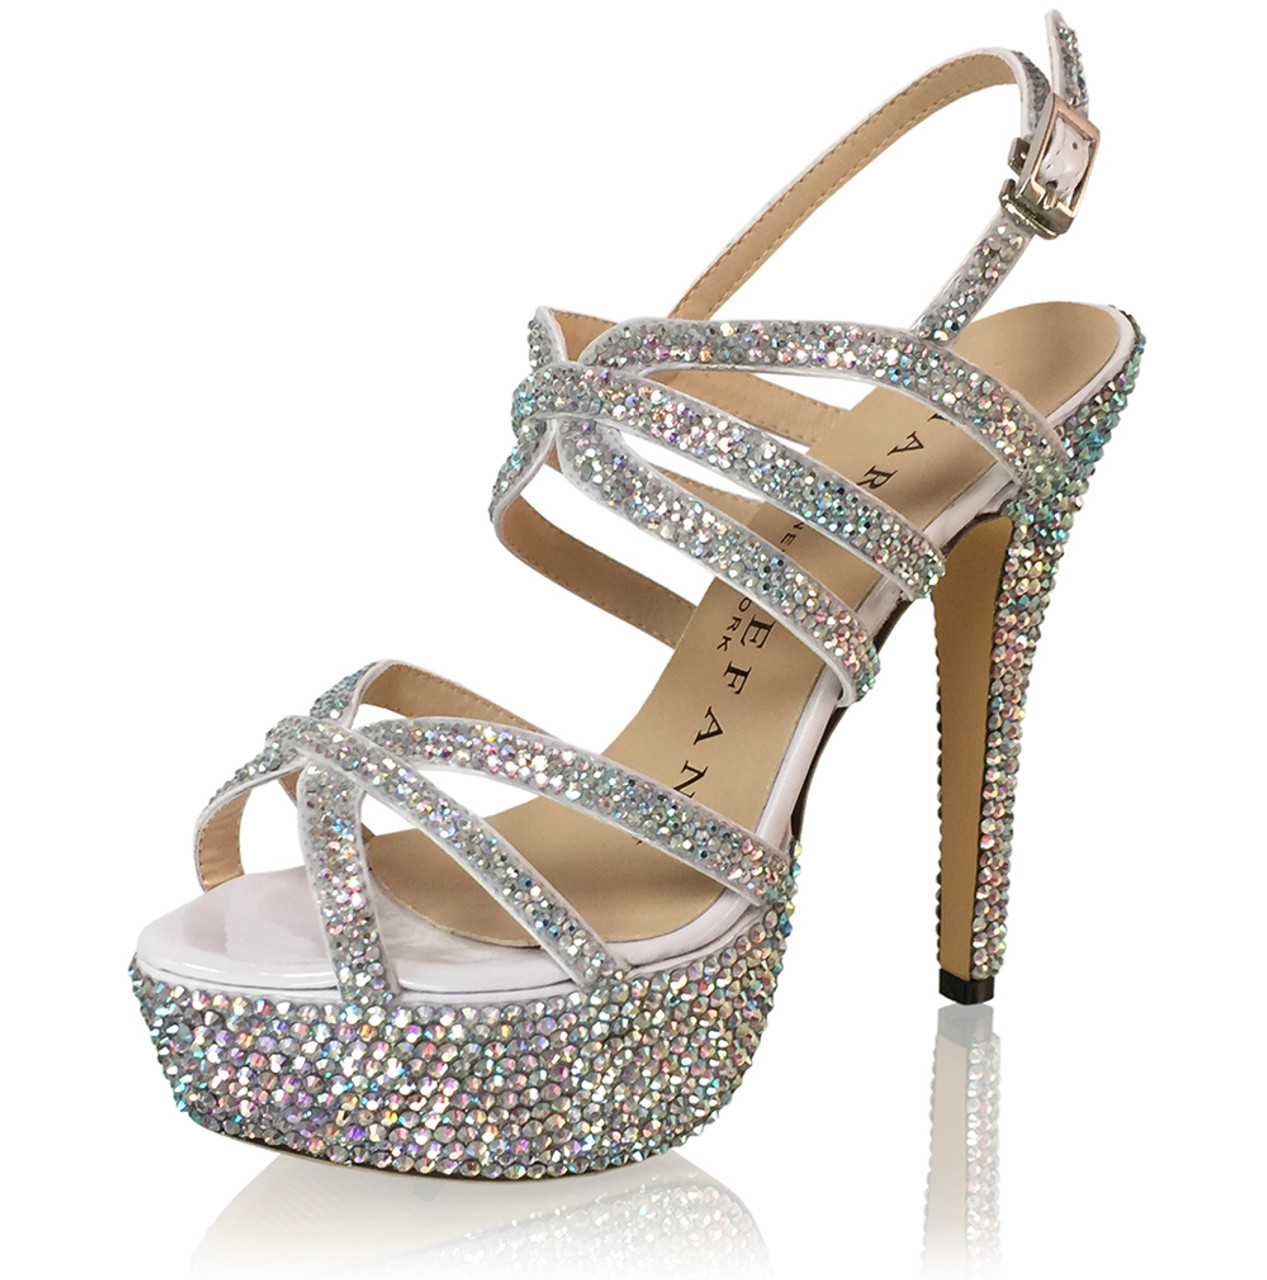 Kendra Hale - Crystal strappy sandal heels